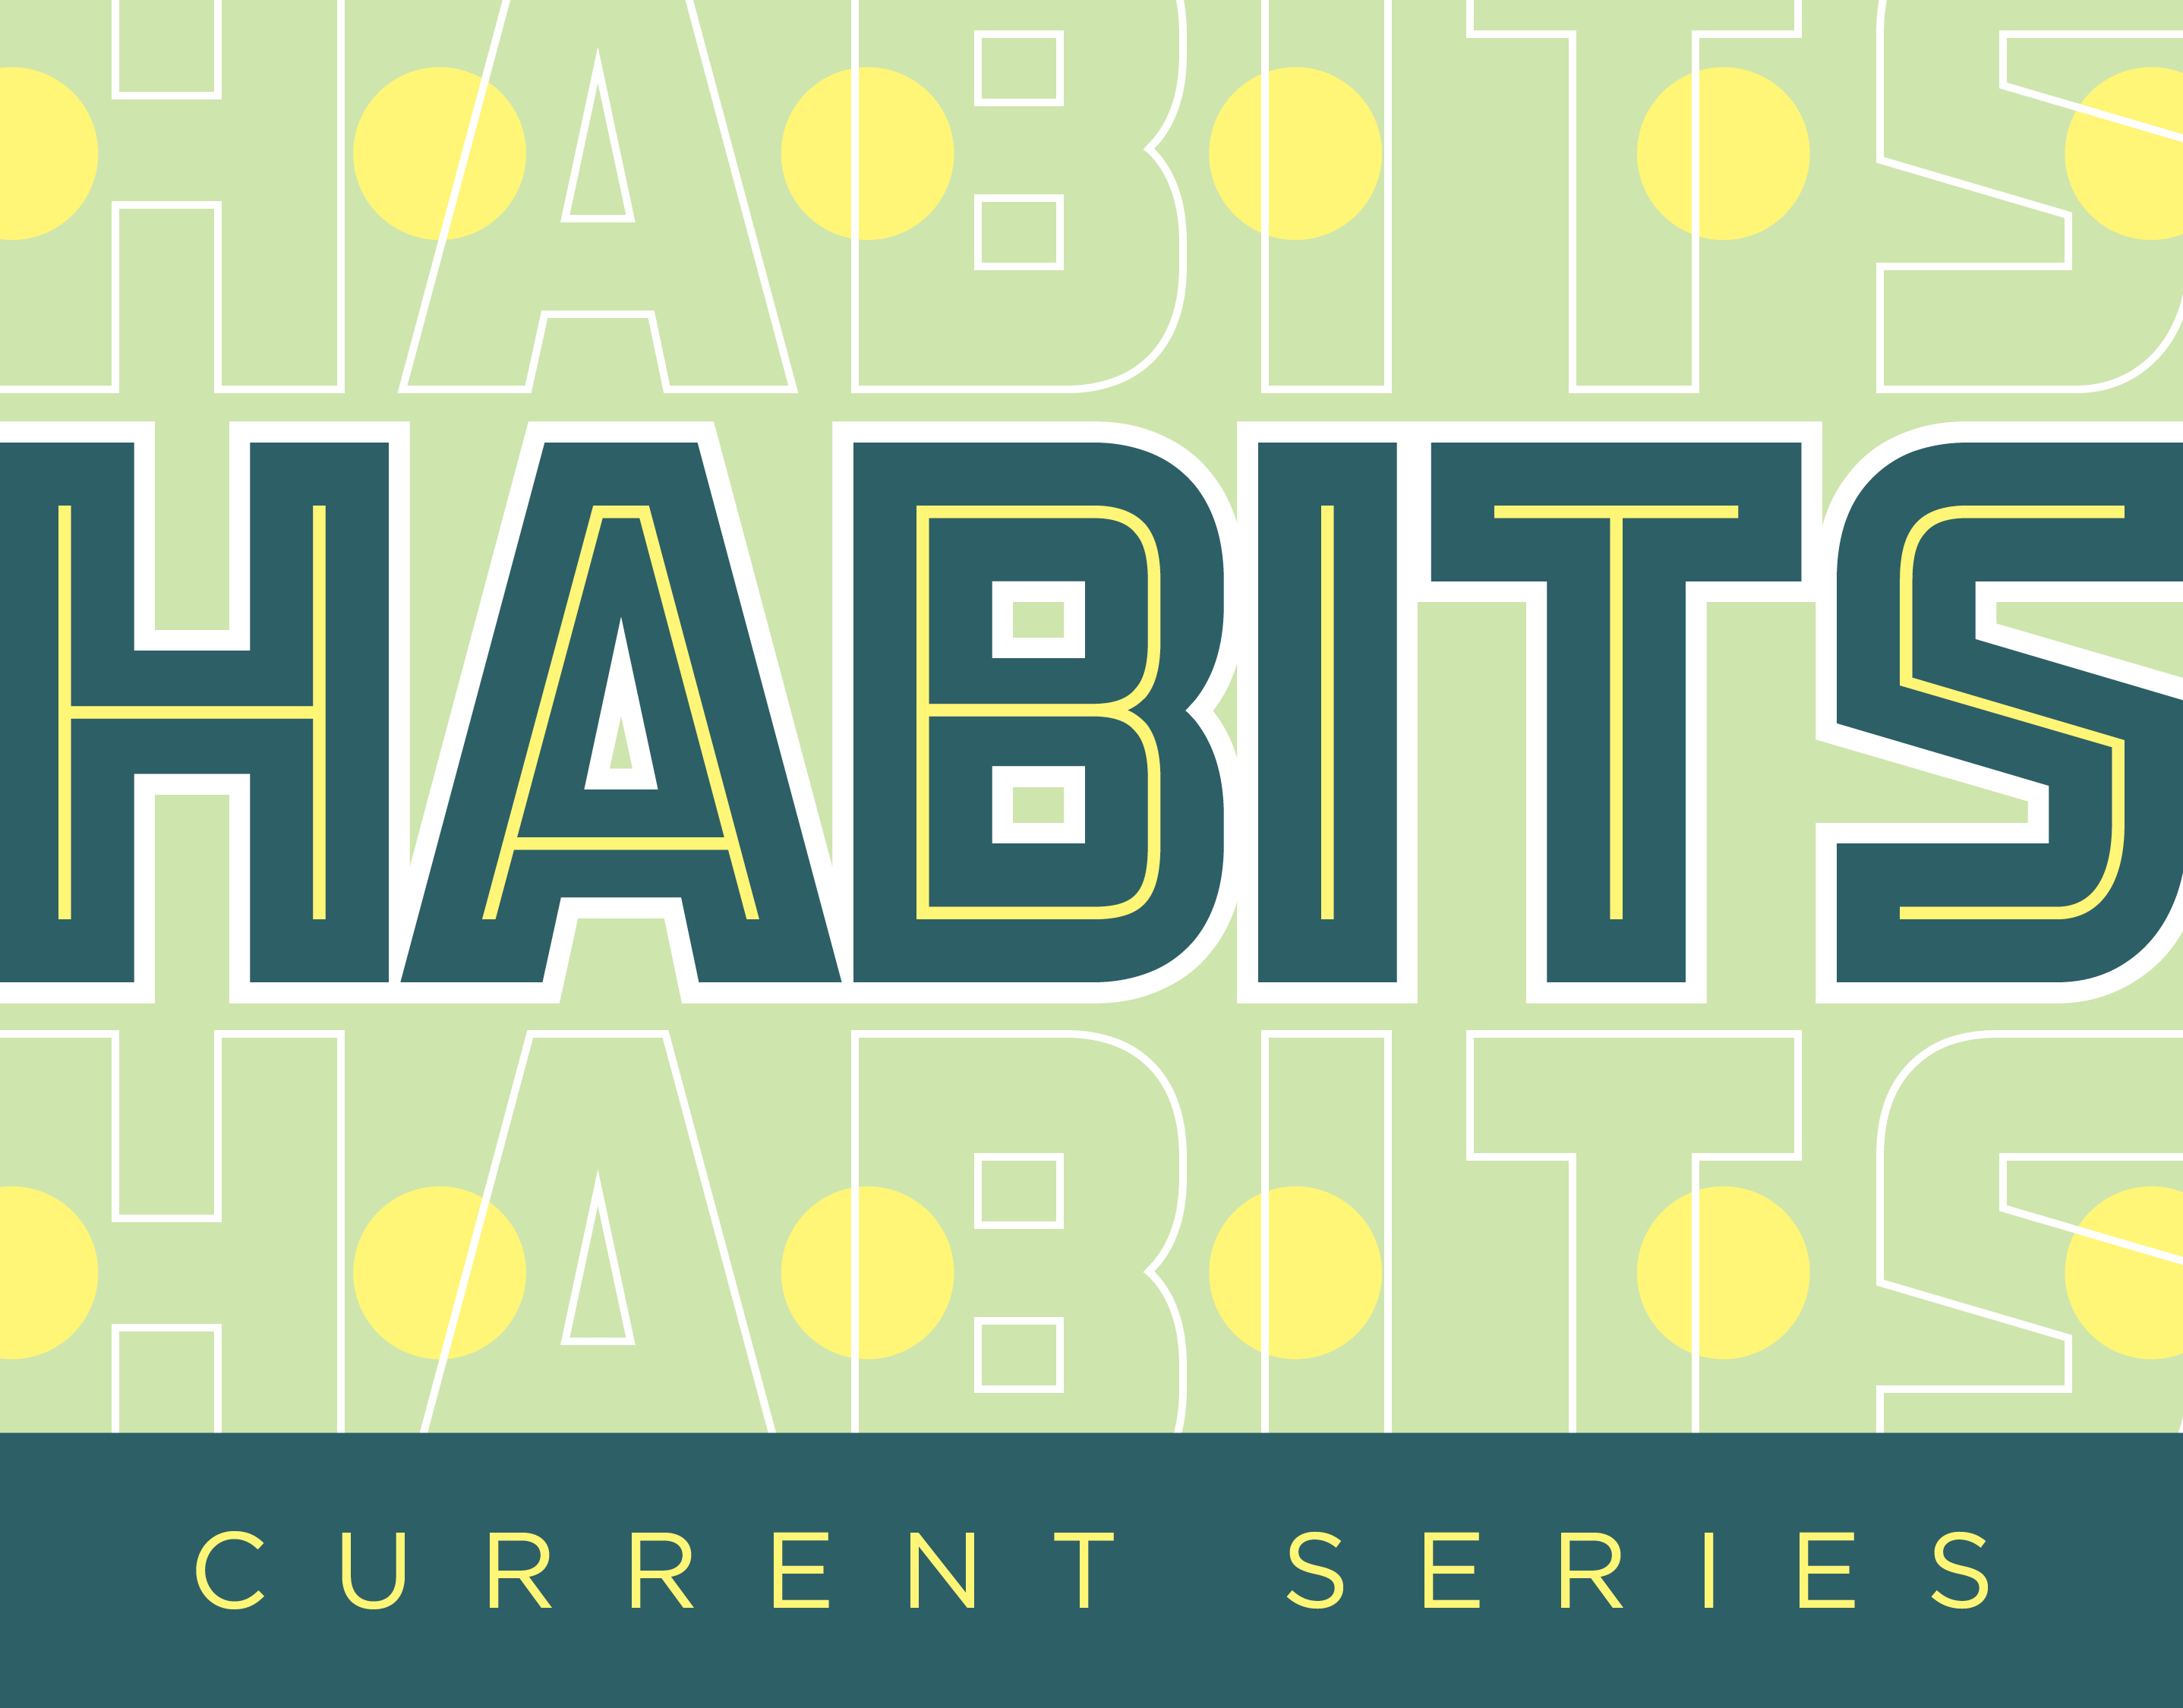 Habits banner